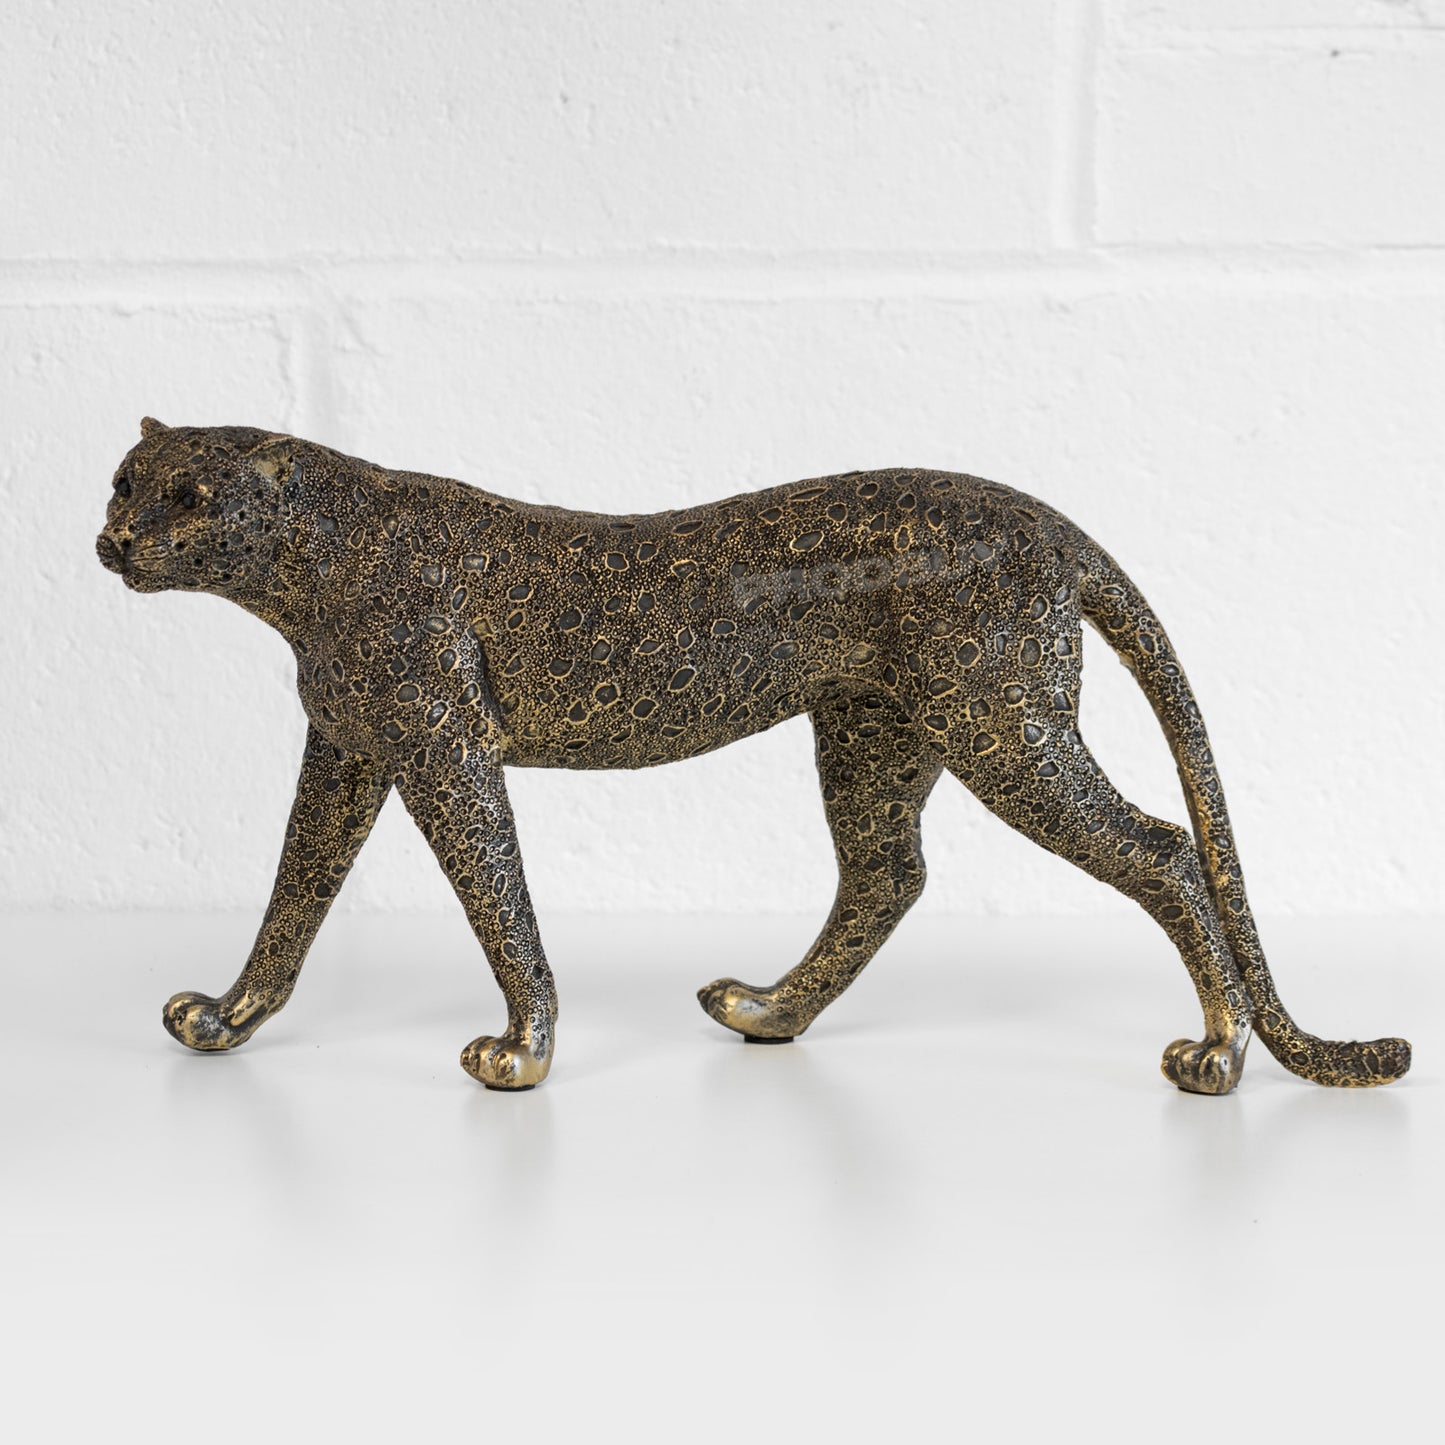 POLYDUKE Cheetah Statue Black Panther Leopard Resin Big Cat